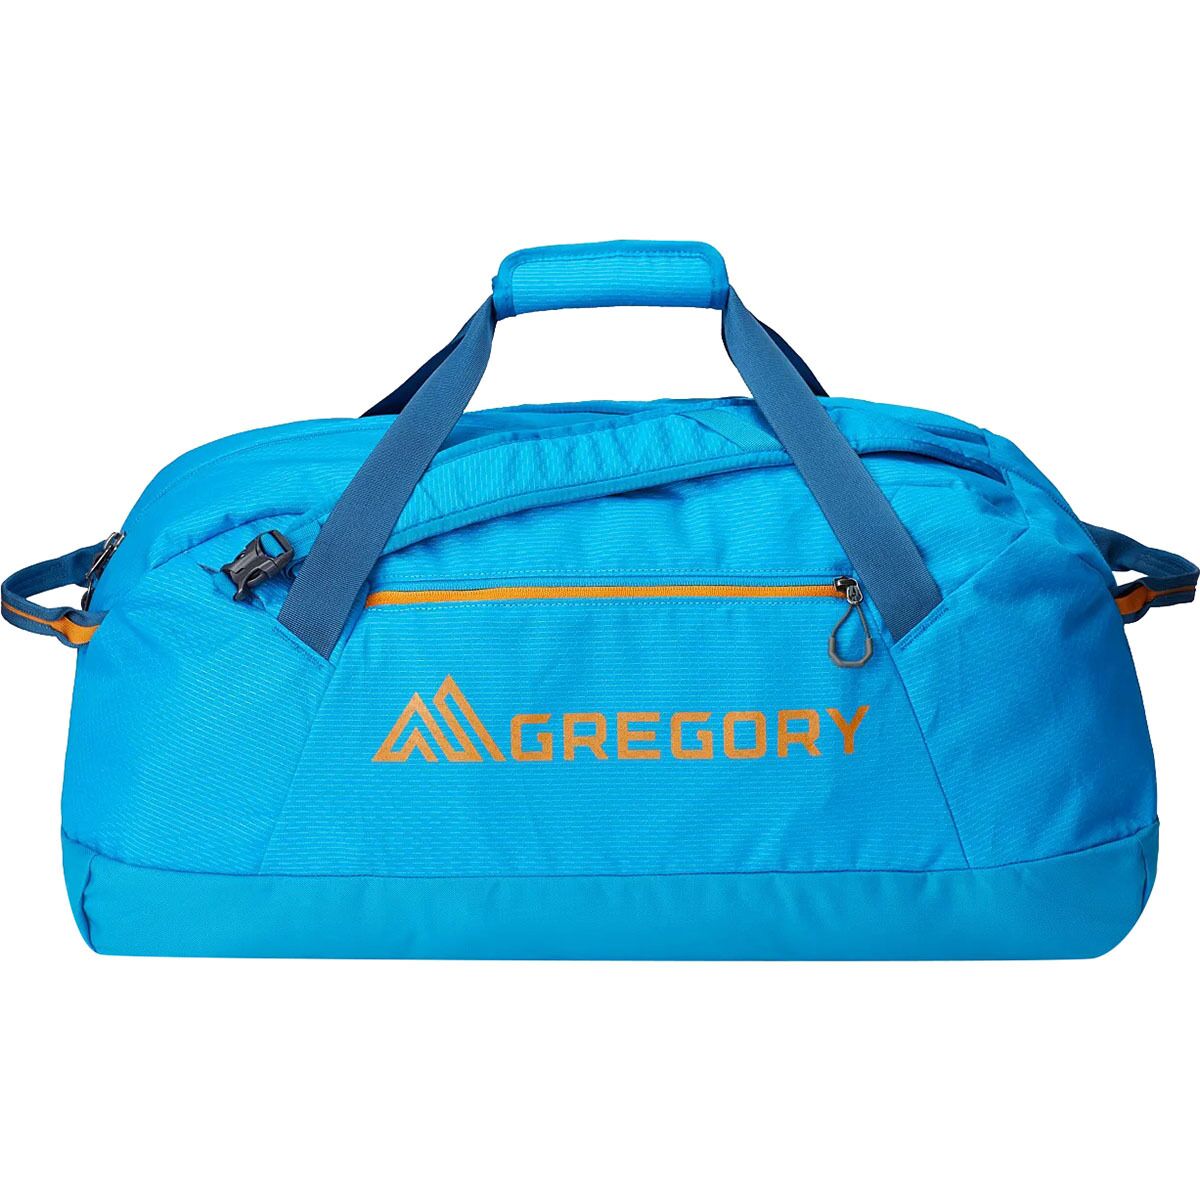 Gregory Supply 65L Duffel Bag